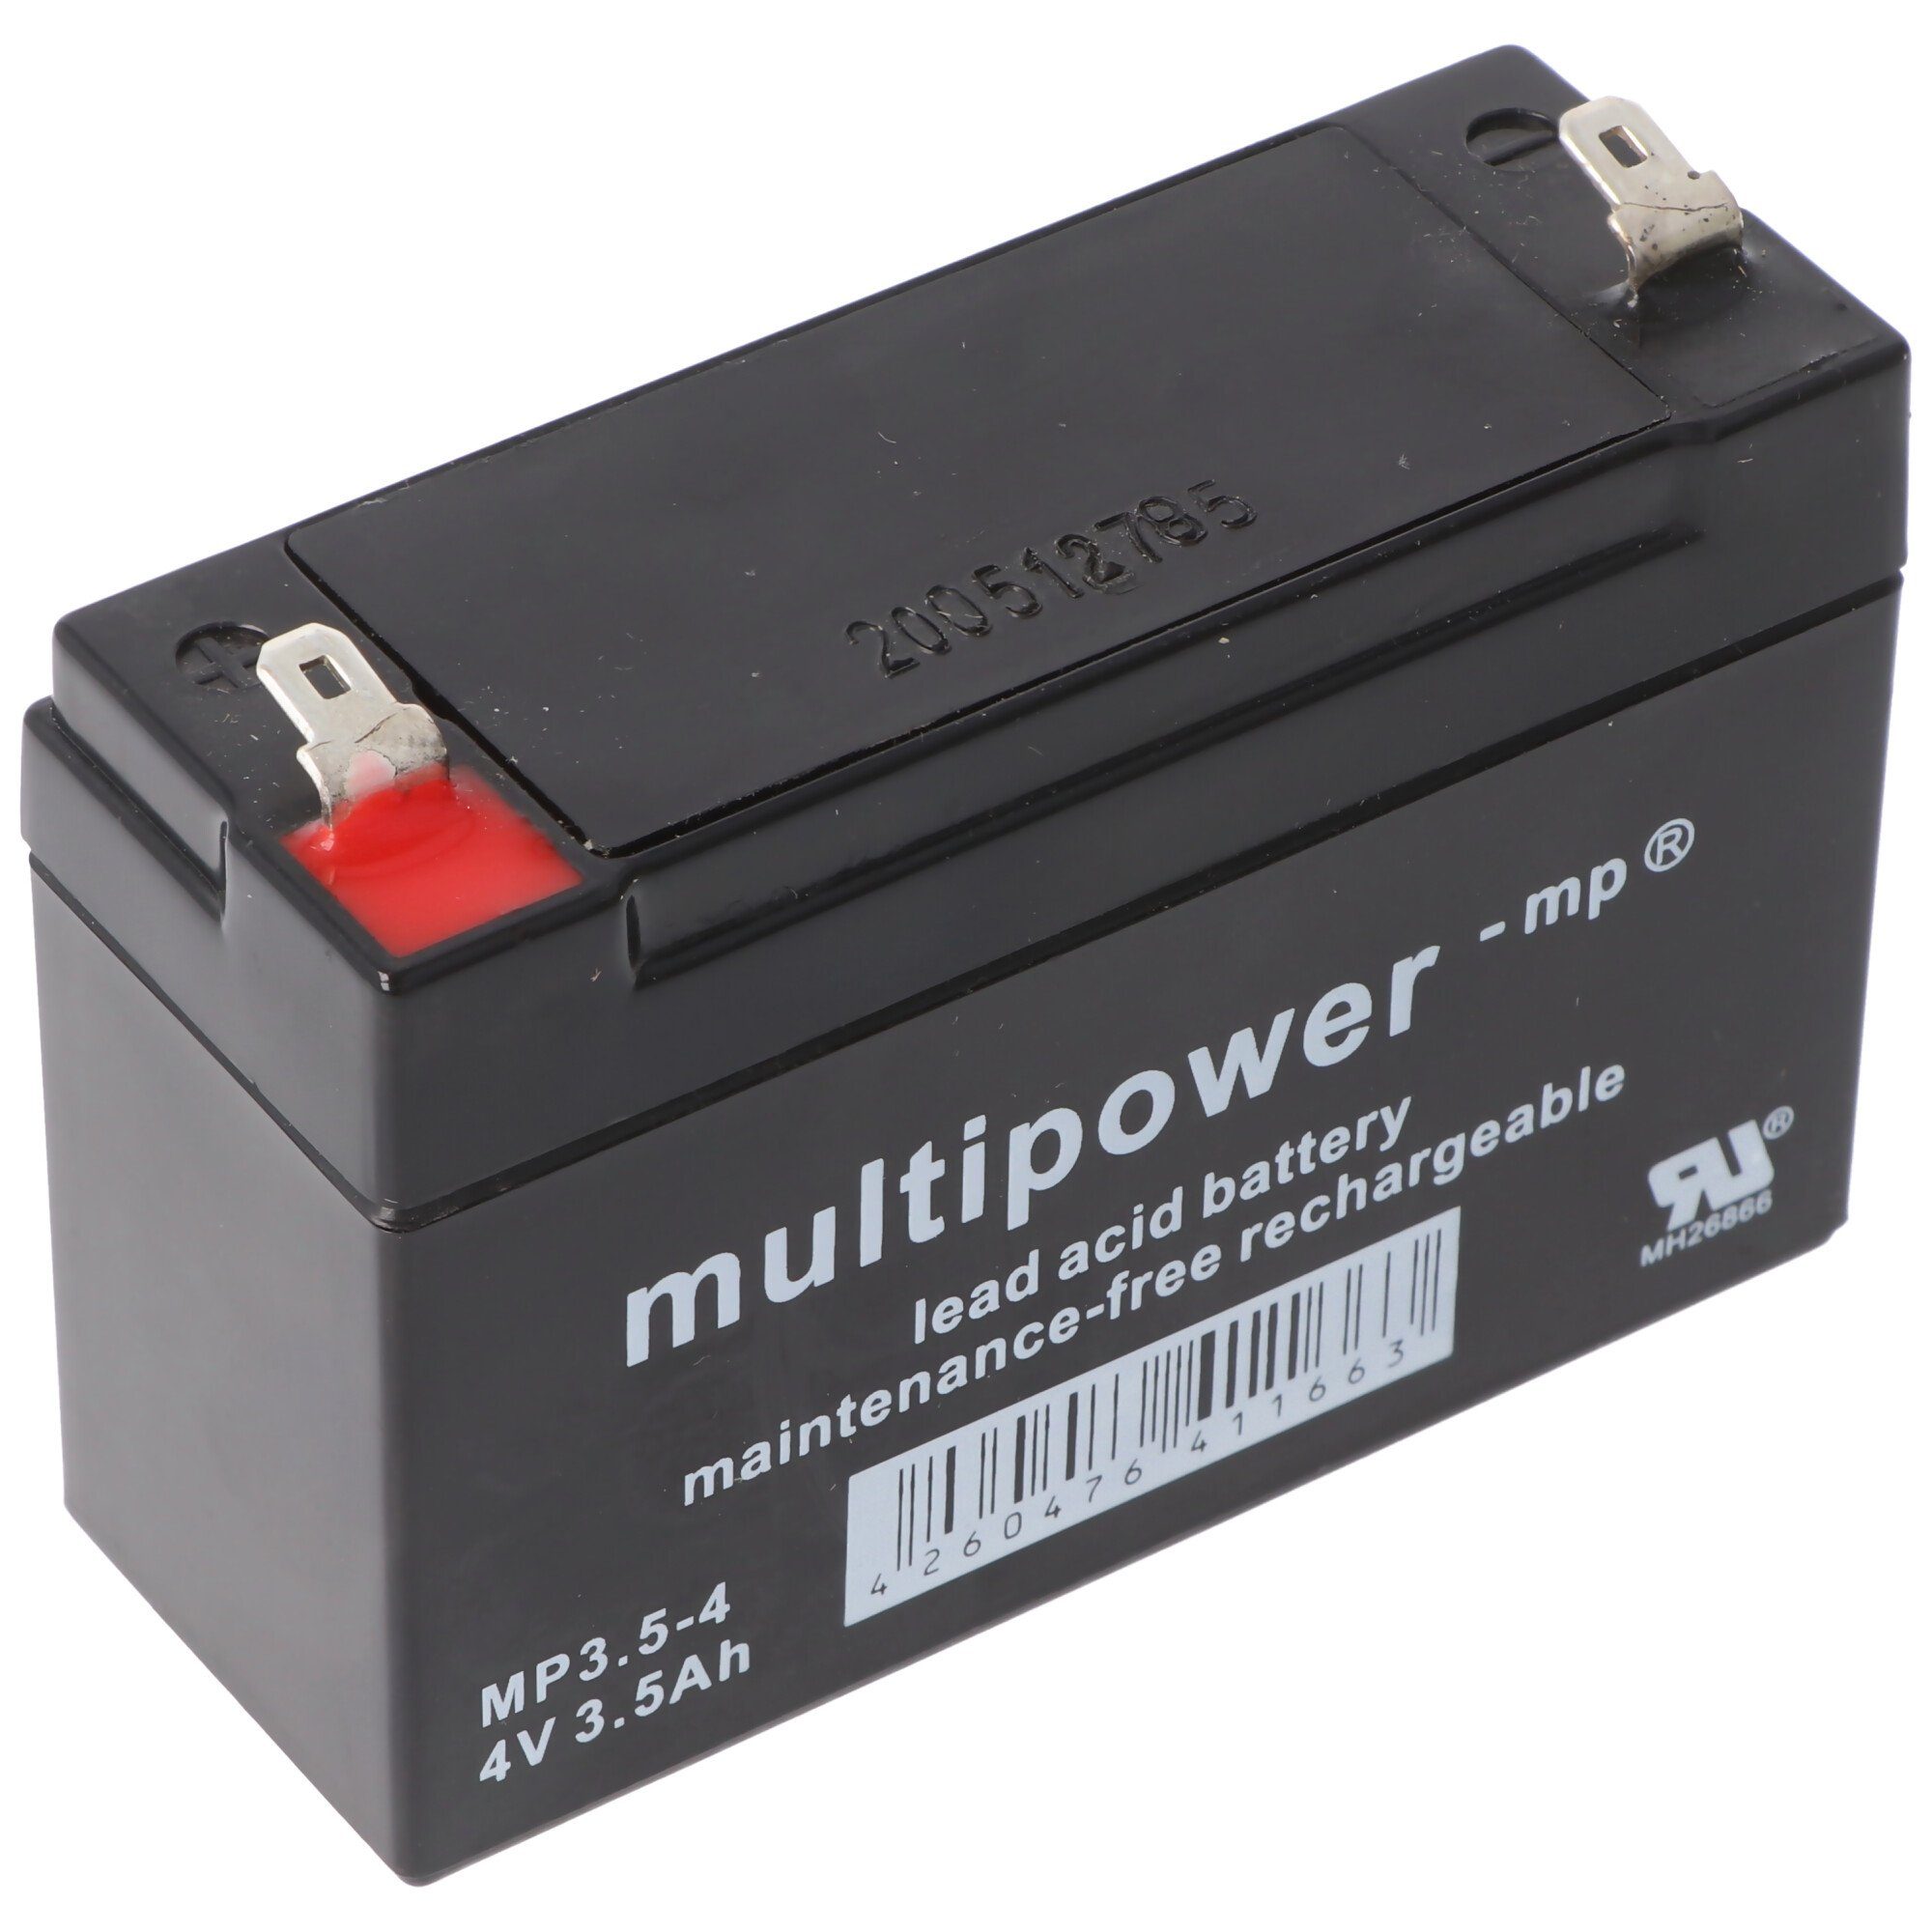 Multipower Steckkon Blei Gel Akku 3,5Ah MP3.5-4 4,8mm Akku Bleiakku 4V AGM Multipower